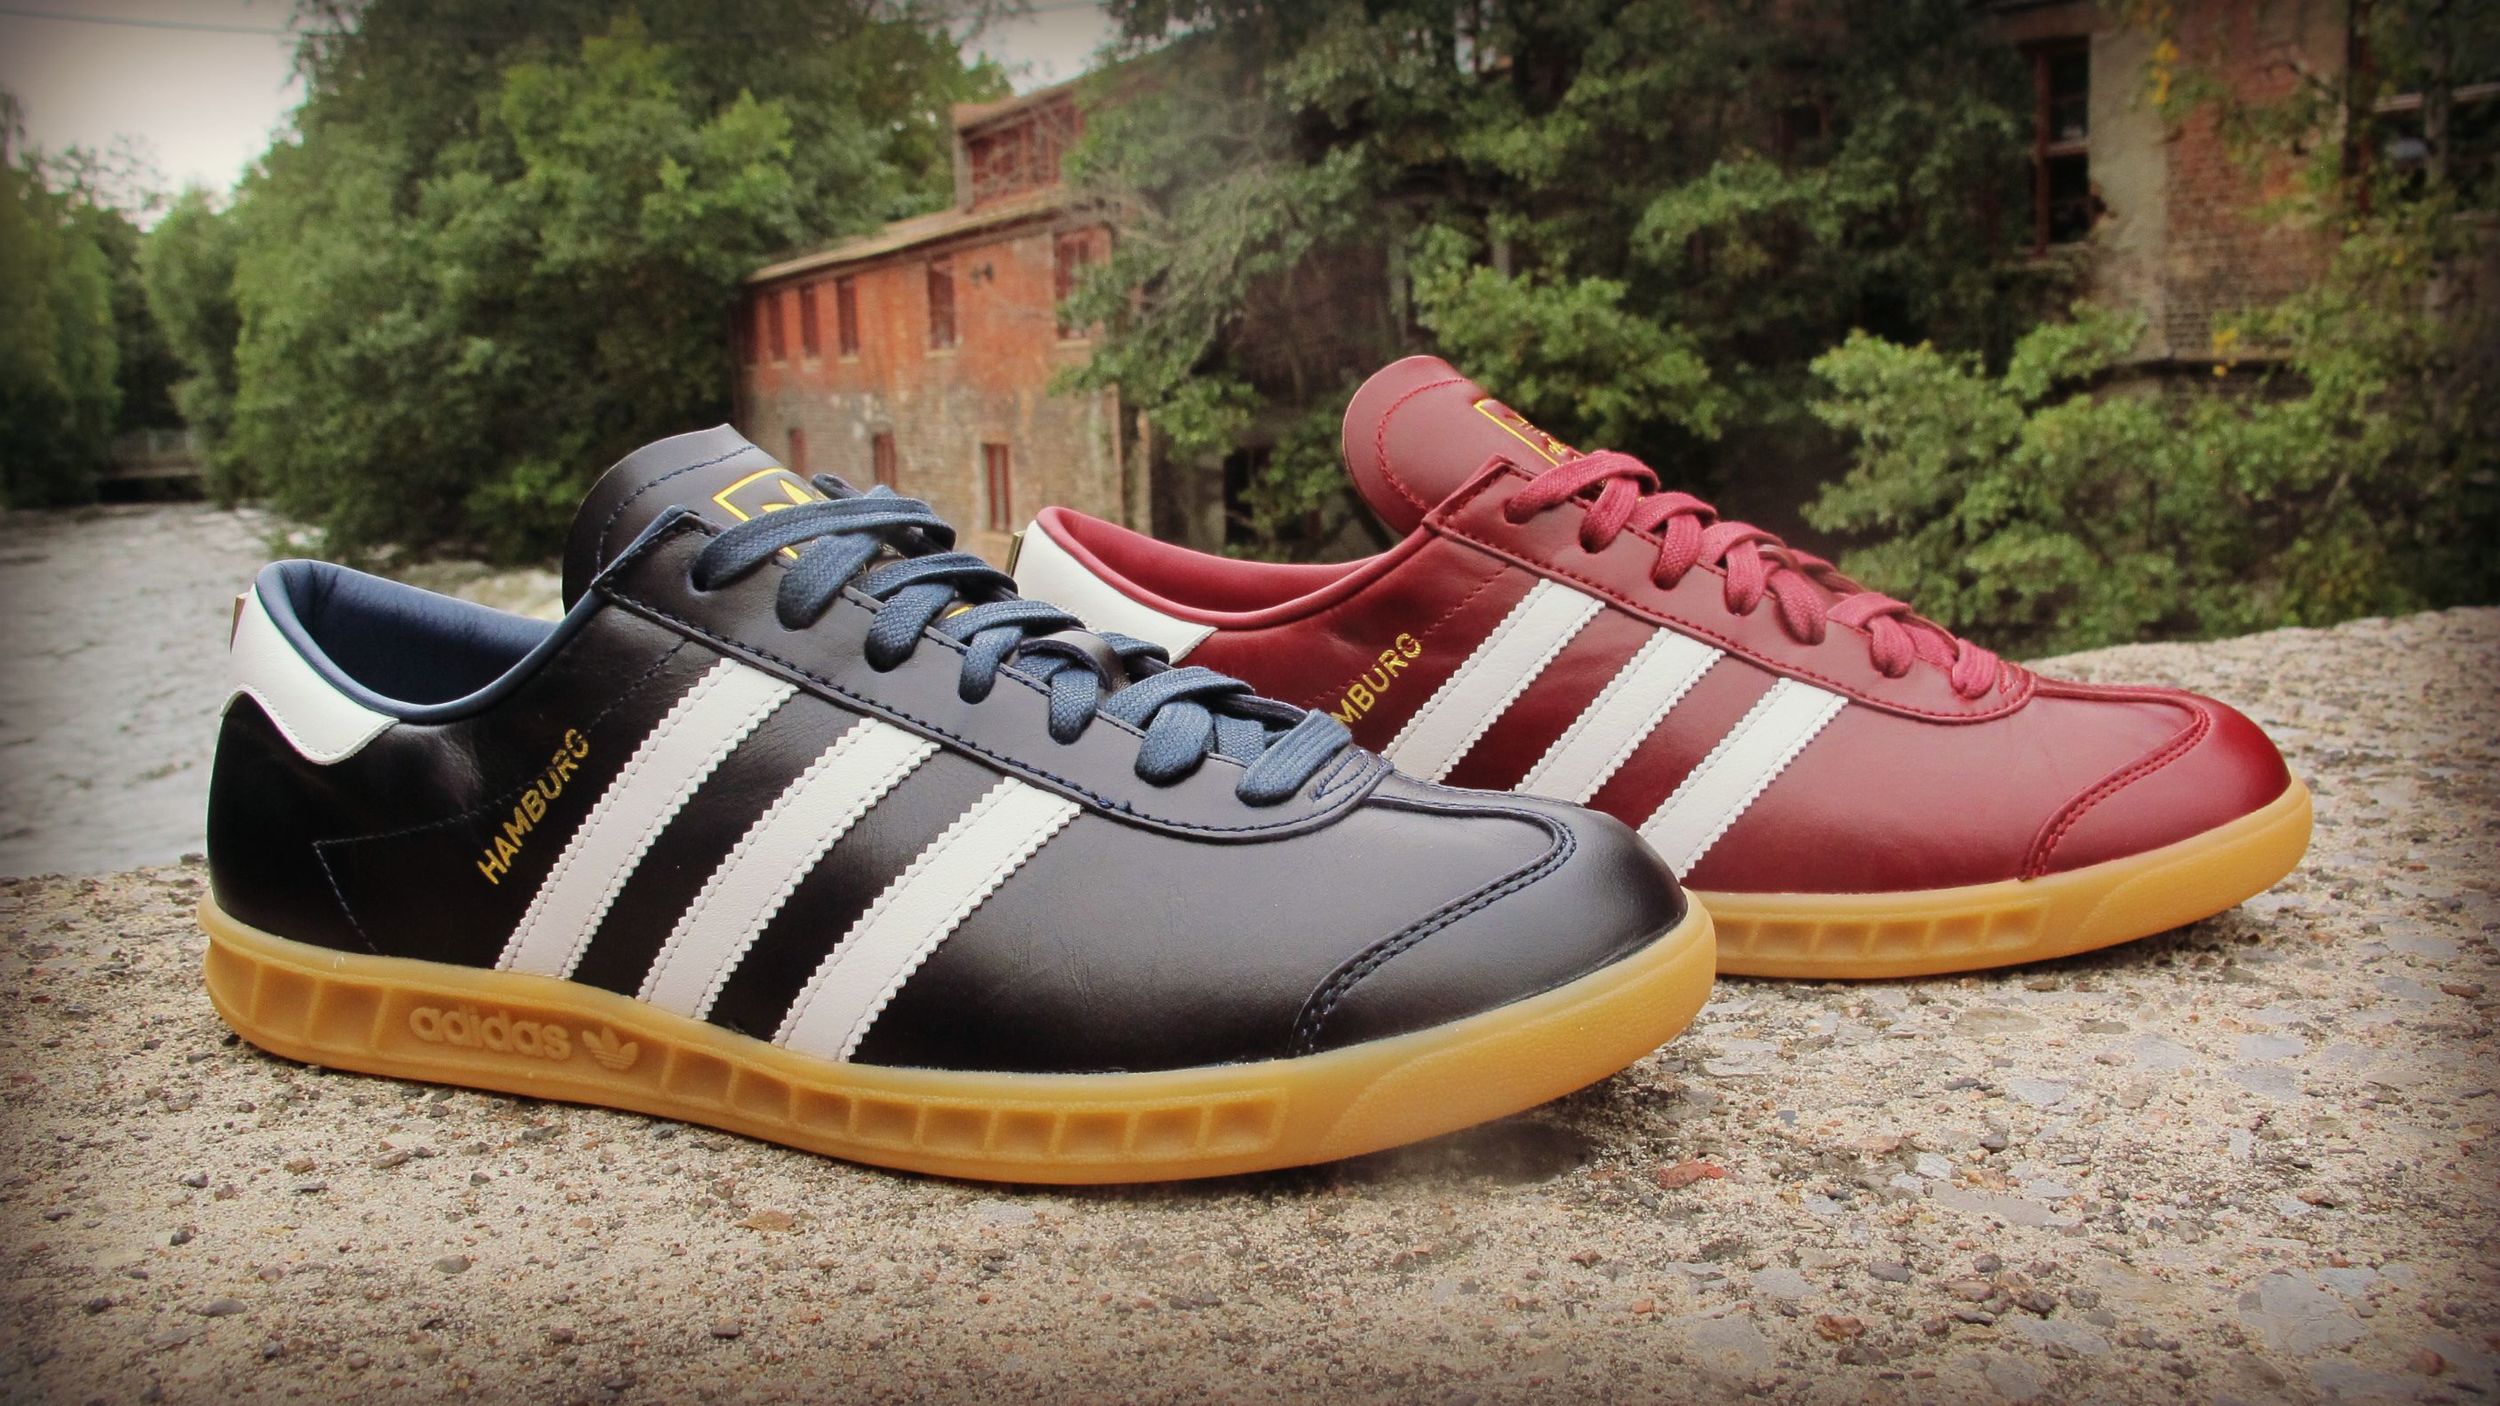 Adidas Originals “Made Germany”. — Oslo Sneaker Fest